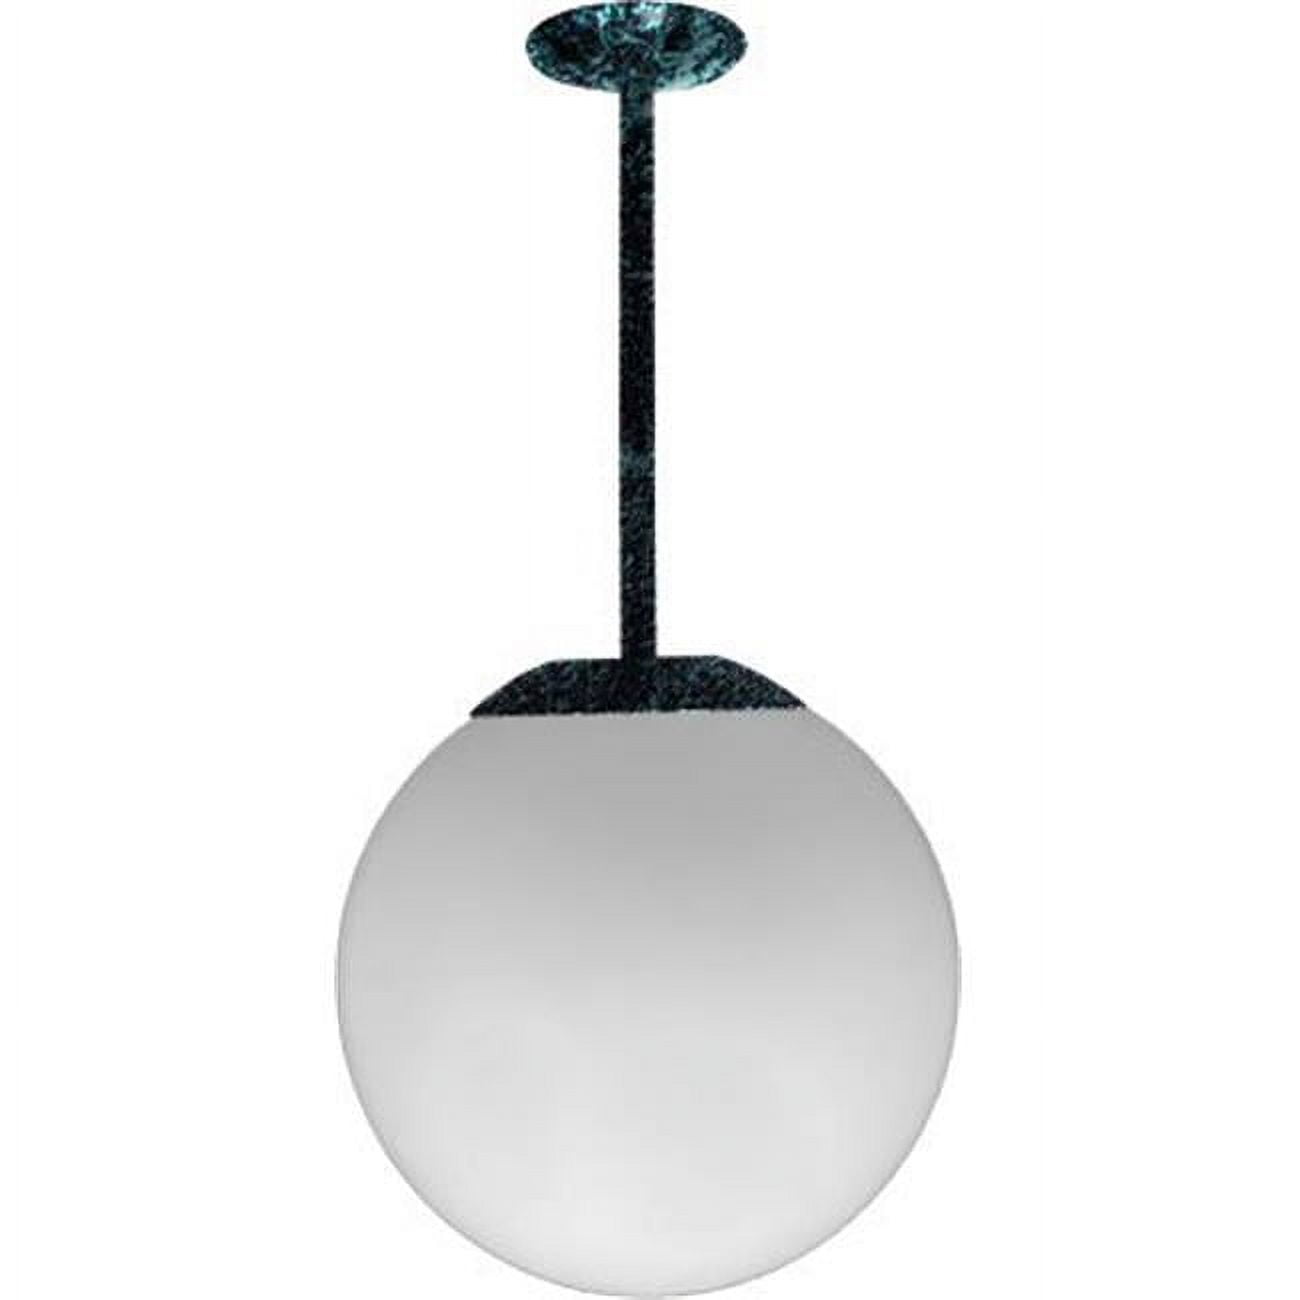 D7515-12-vg 16 In. 120 V 50 Watts Ceiling Globe Fixture 12 In. Drop With Metal Halide Lamp, Verde Green